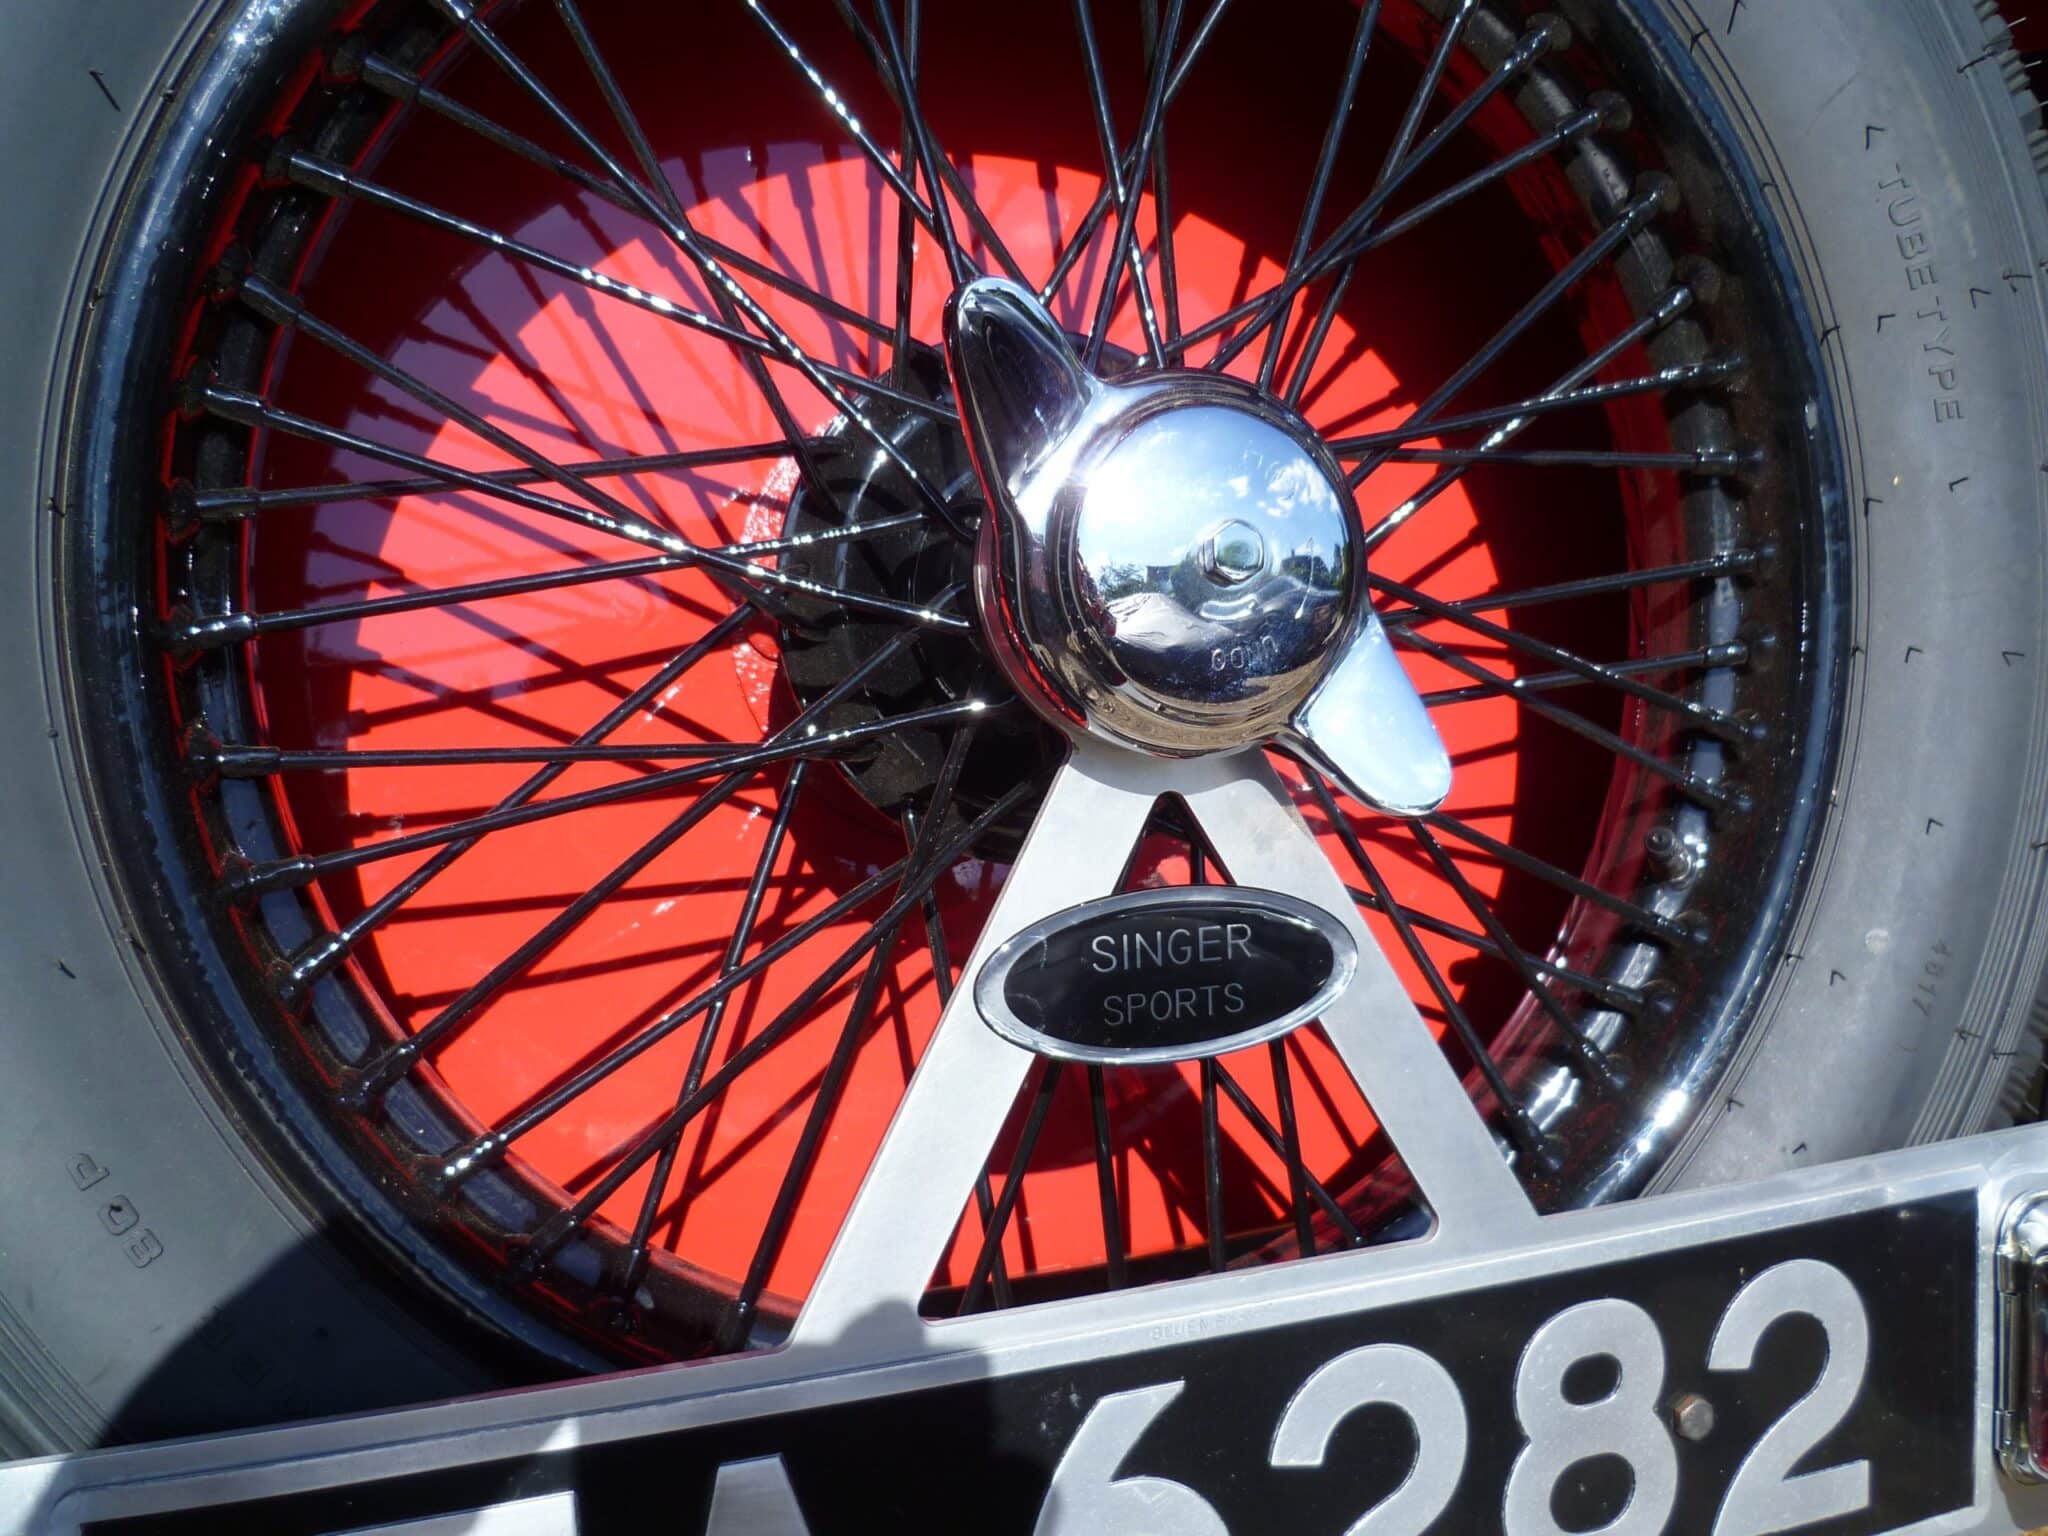 Weather-Resistant Alloy Wheel Emblems for Van Conversions